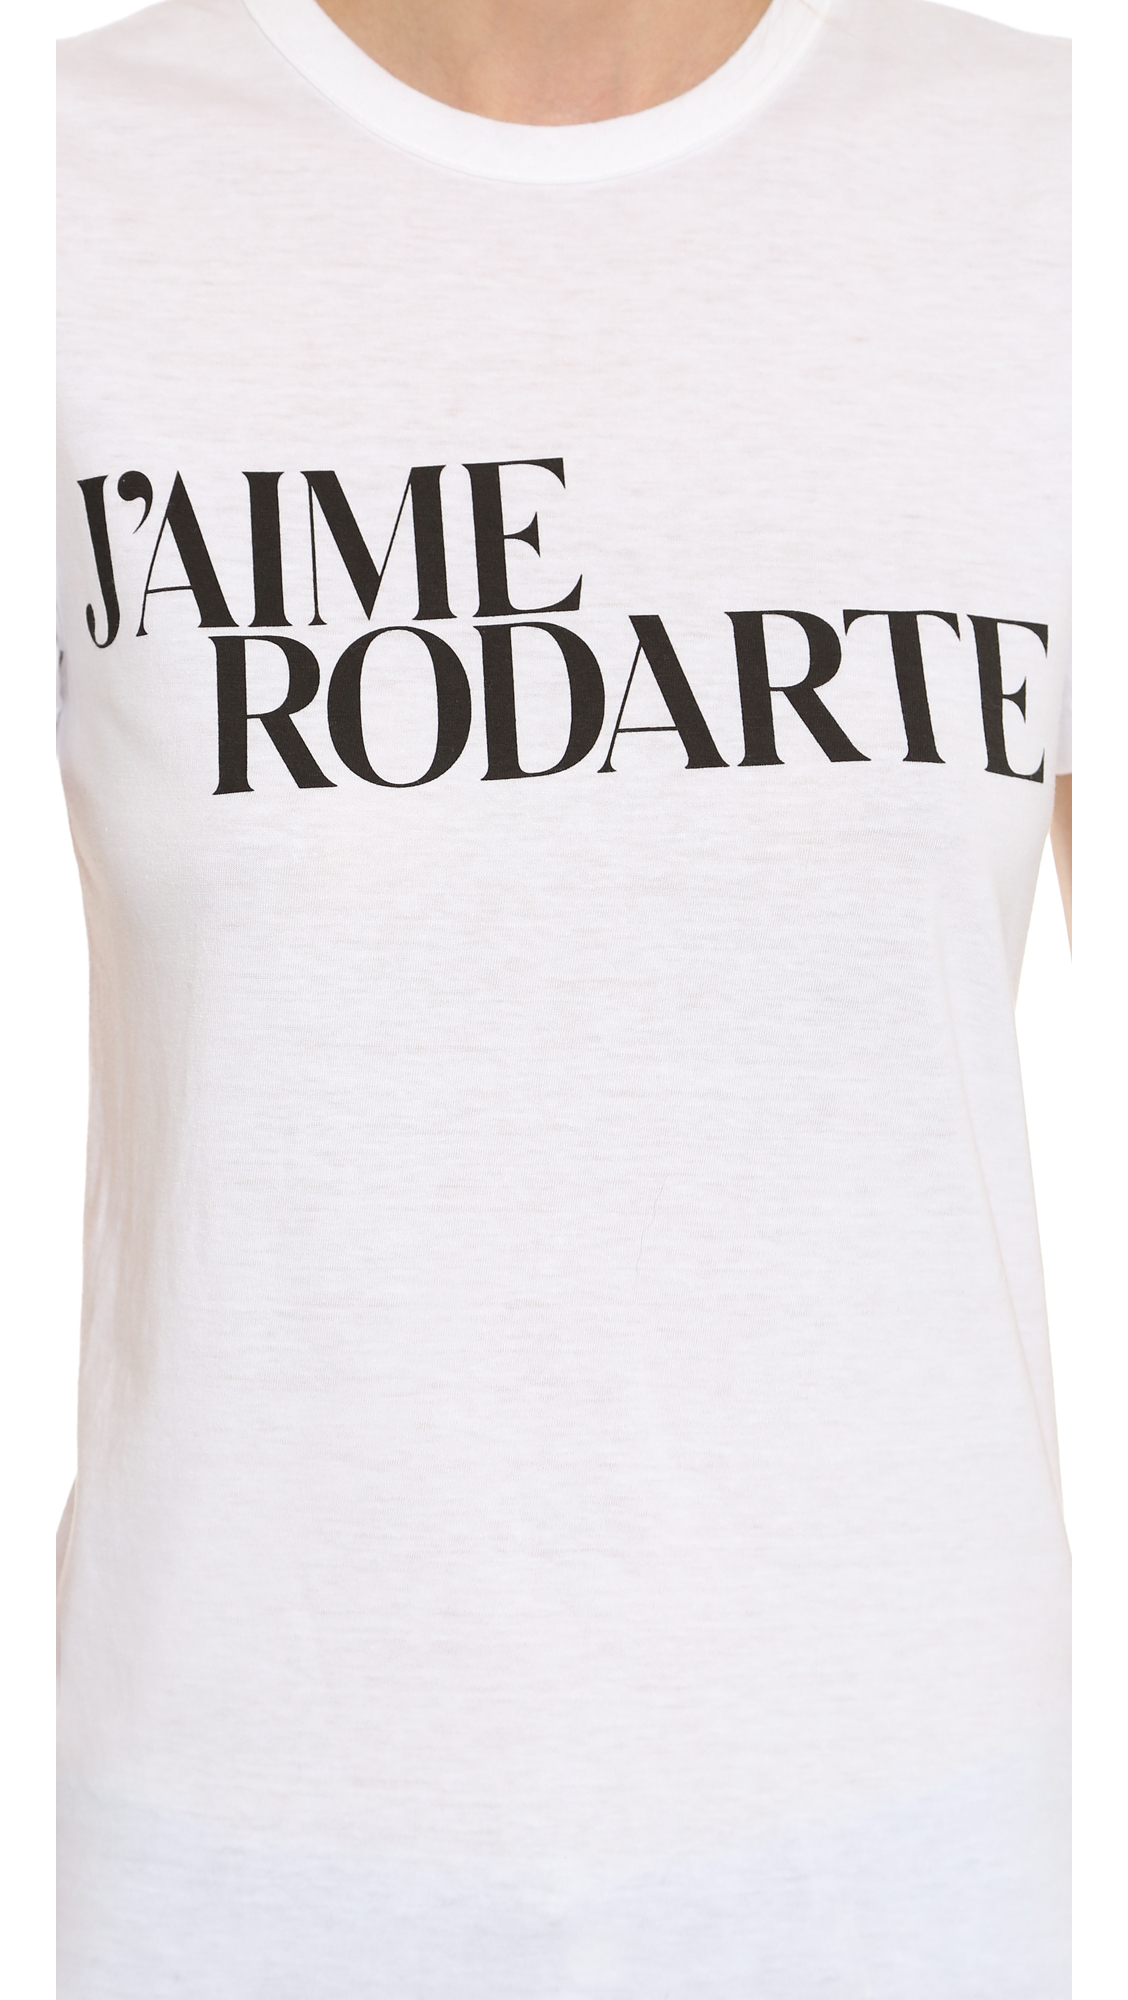 Rodarte Love / Hate T-shirt in White | Lyst